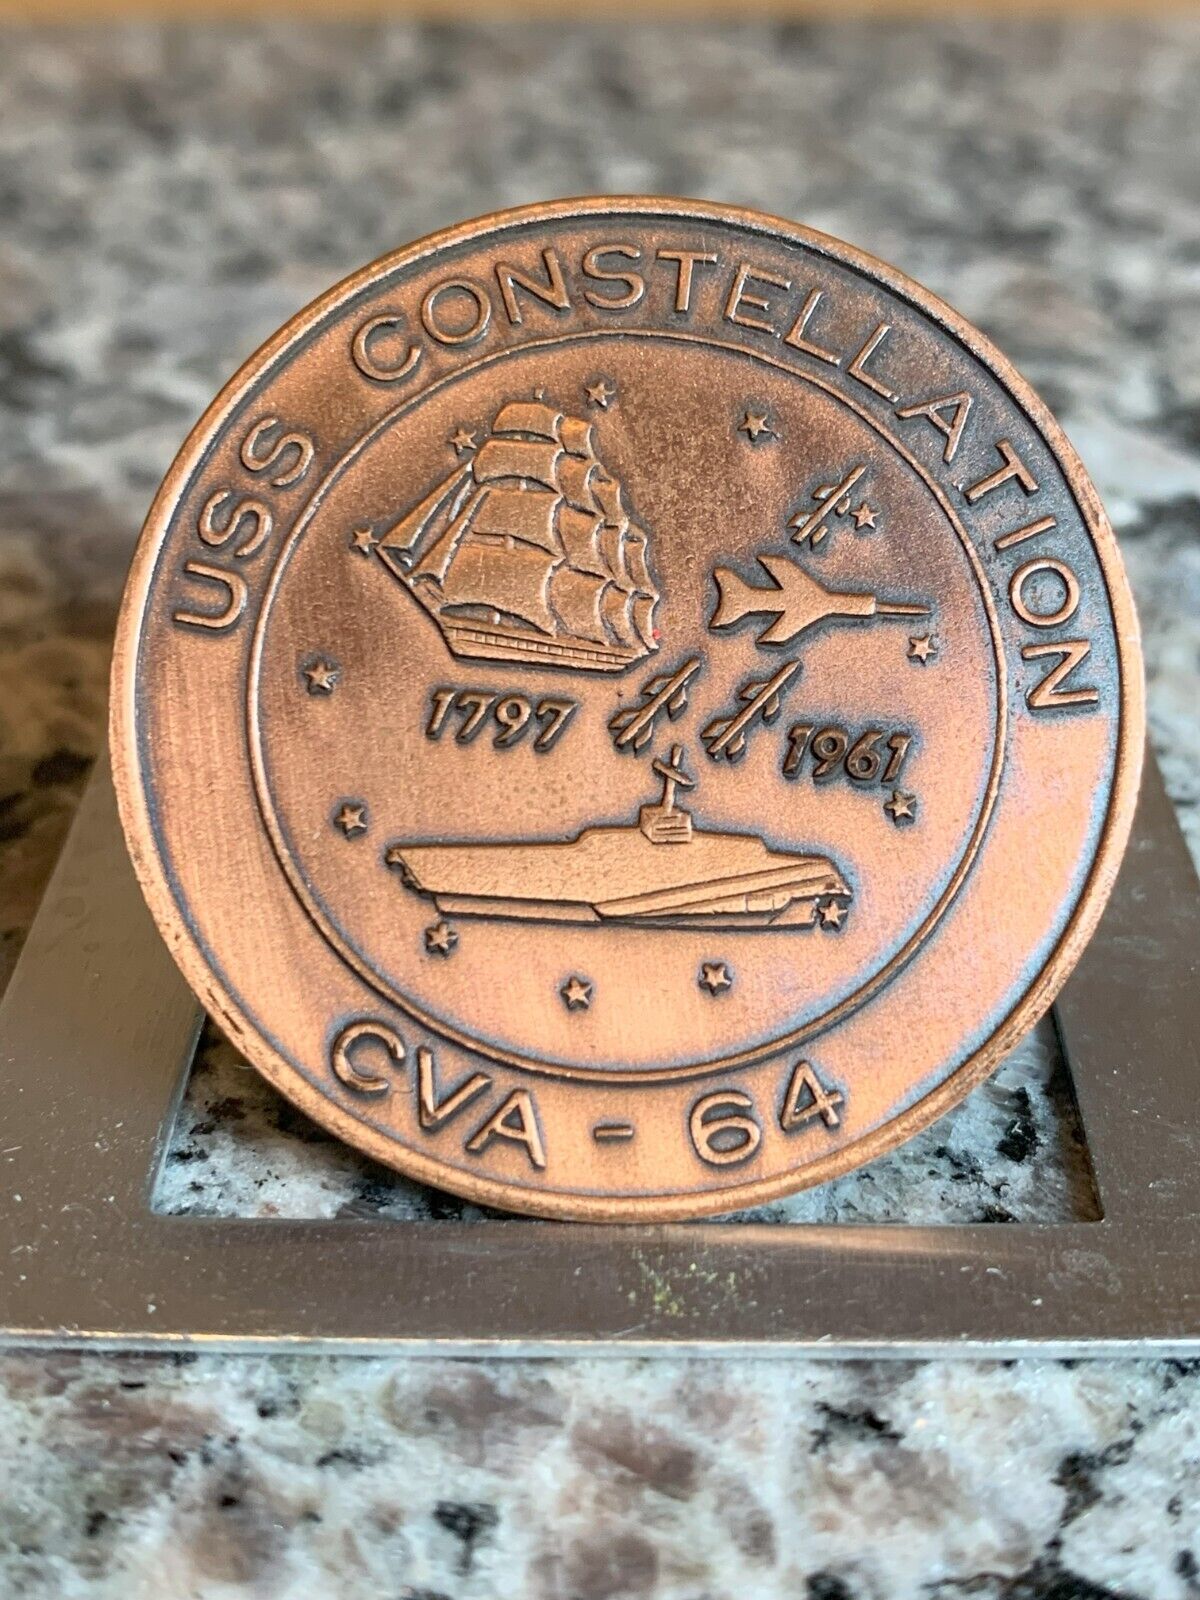 USS Constellation CVA64 Commissioning Medal New York Naval Shipyard 1961